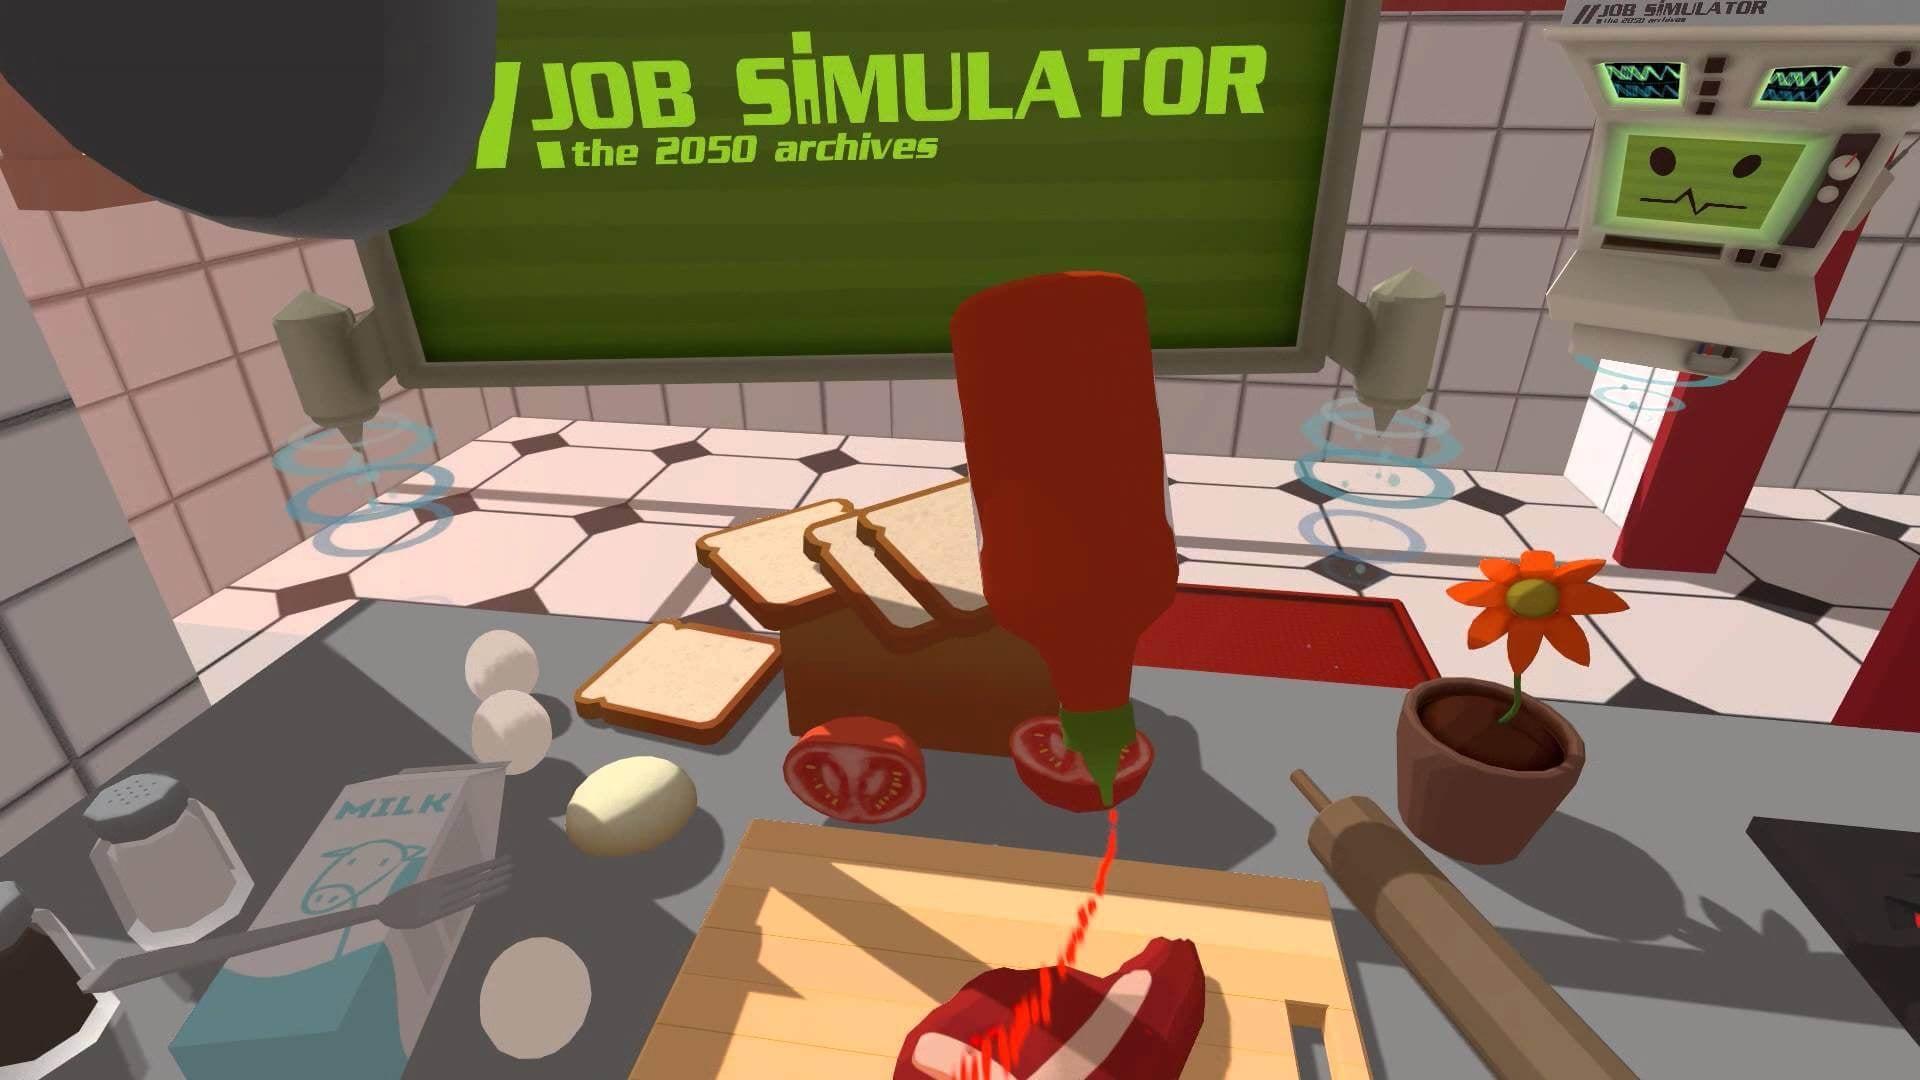 Job Simulator Announced For Playstation VR